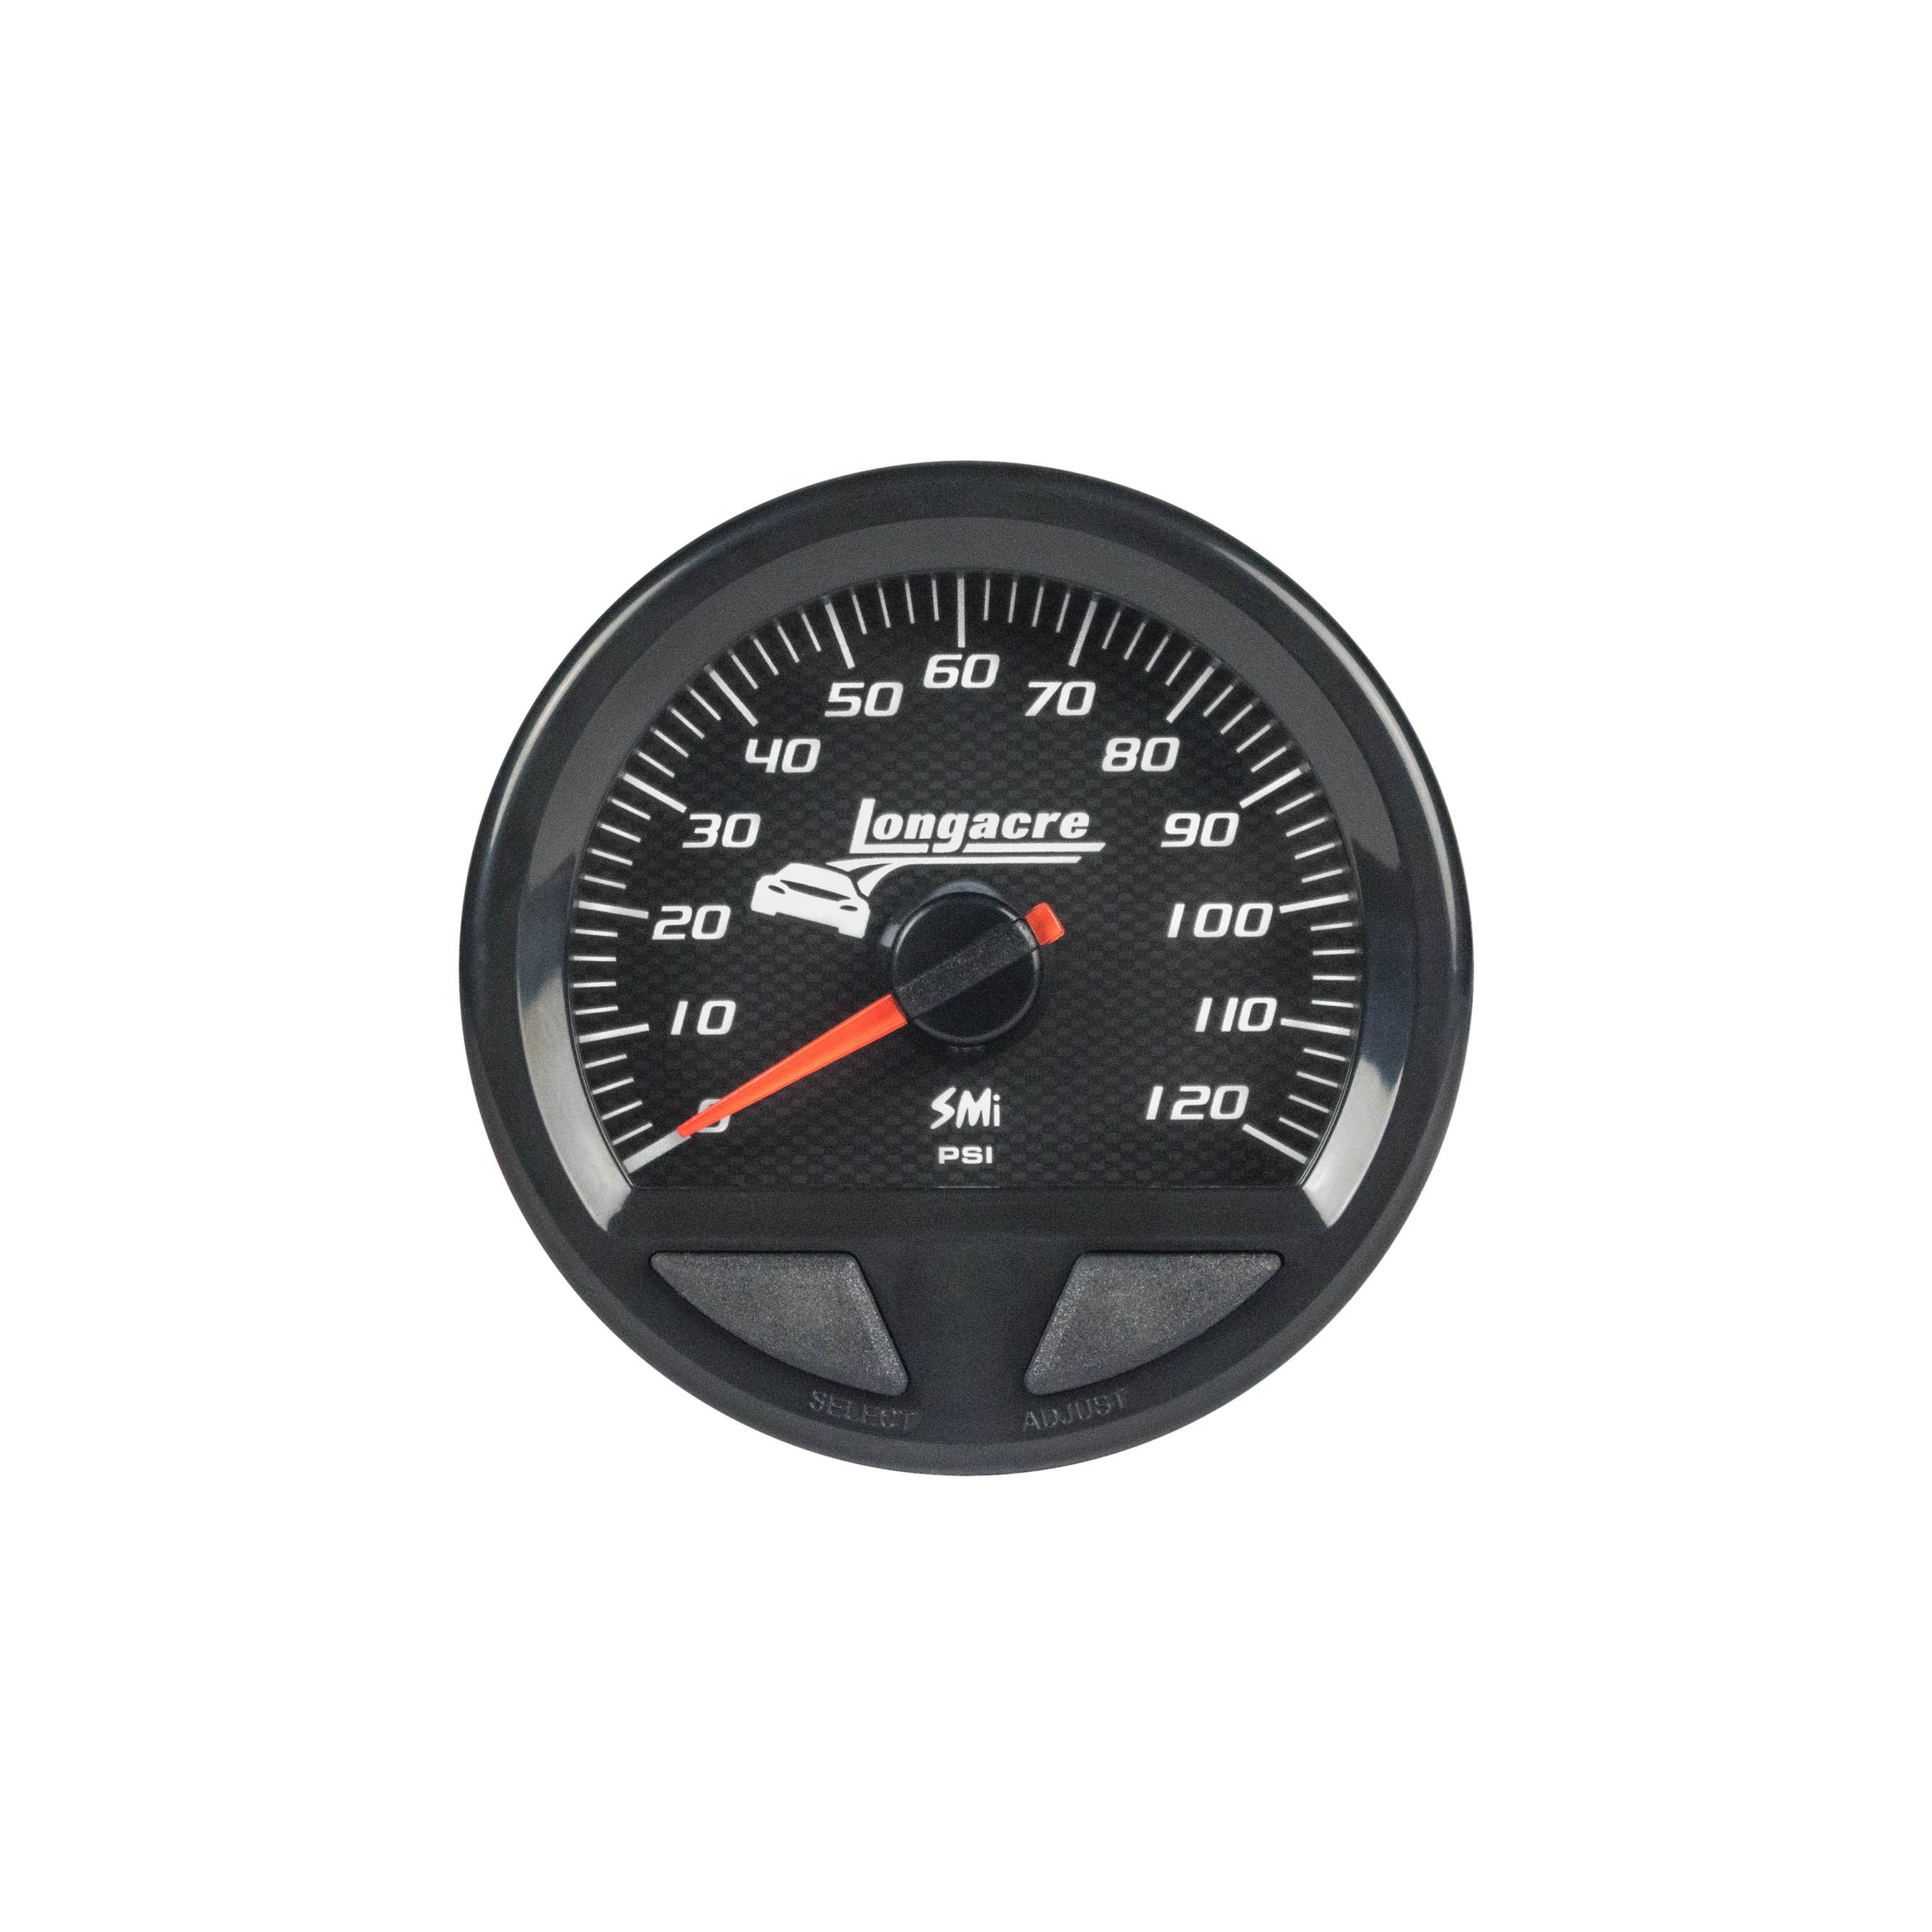 Waterproof SMI Fuel Pressure Gauge 0-100psi - 52-46743